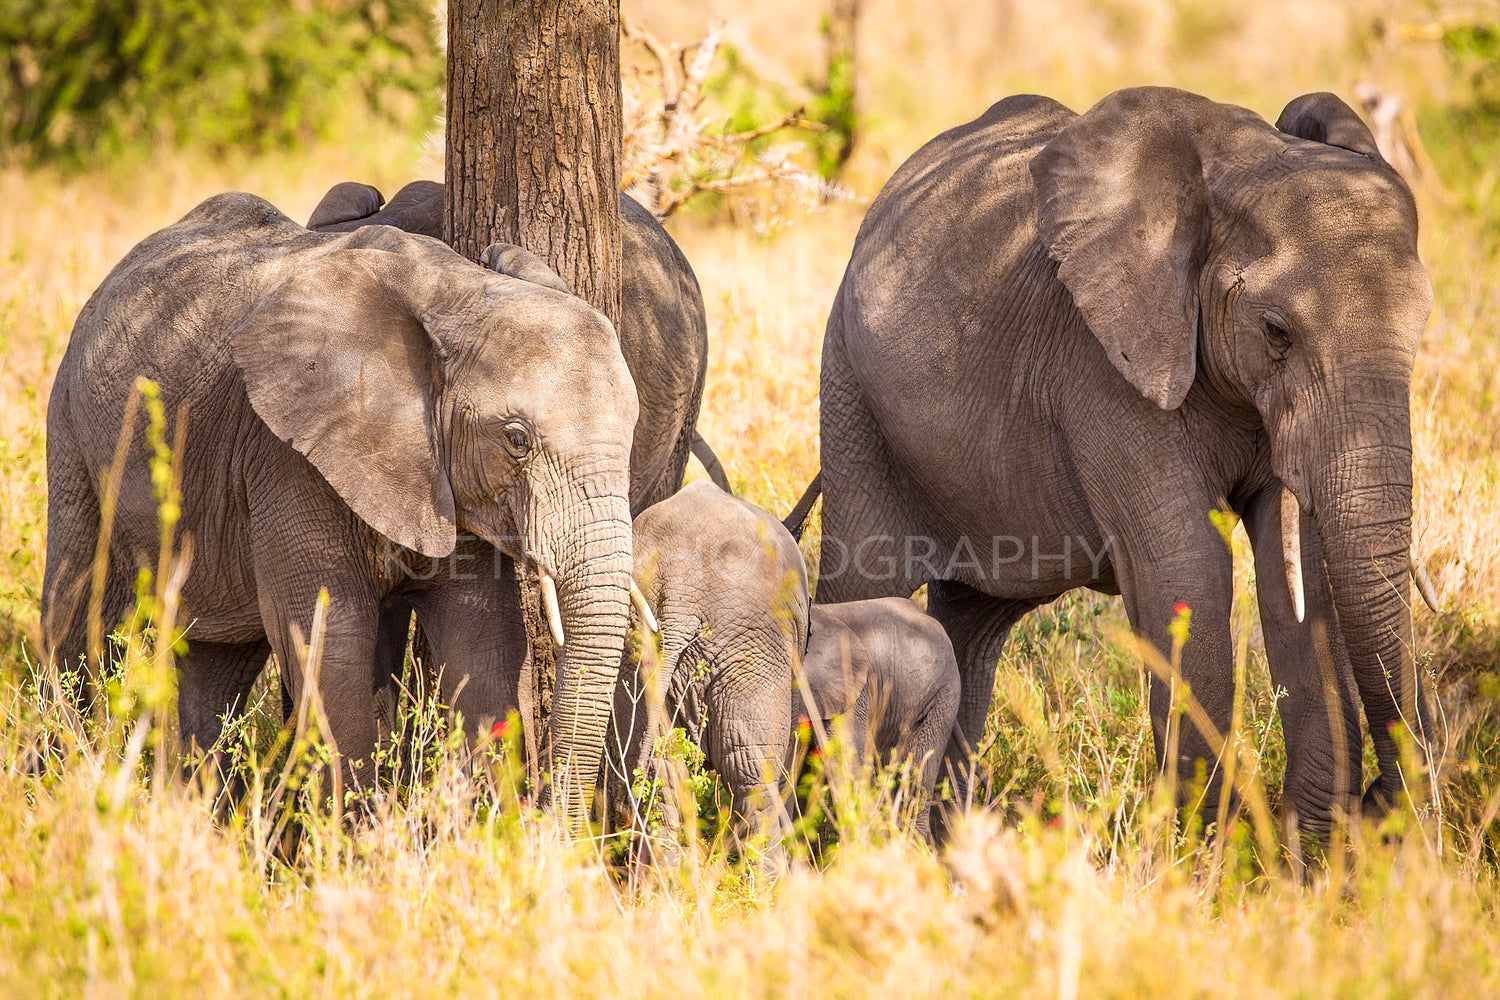 Elephants eating grass in Serengeti Africa